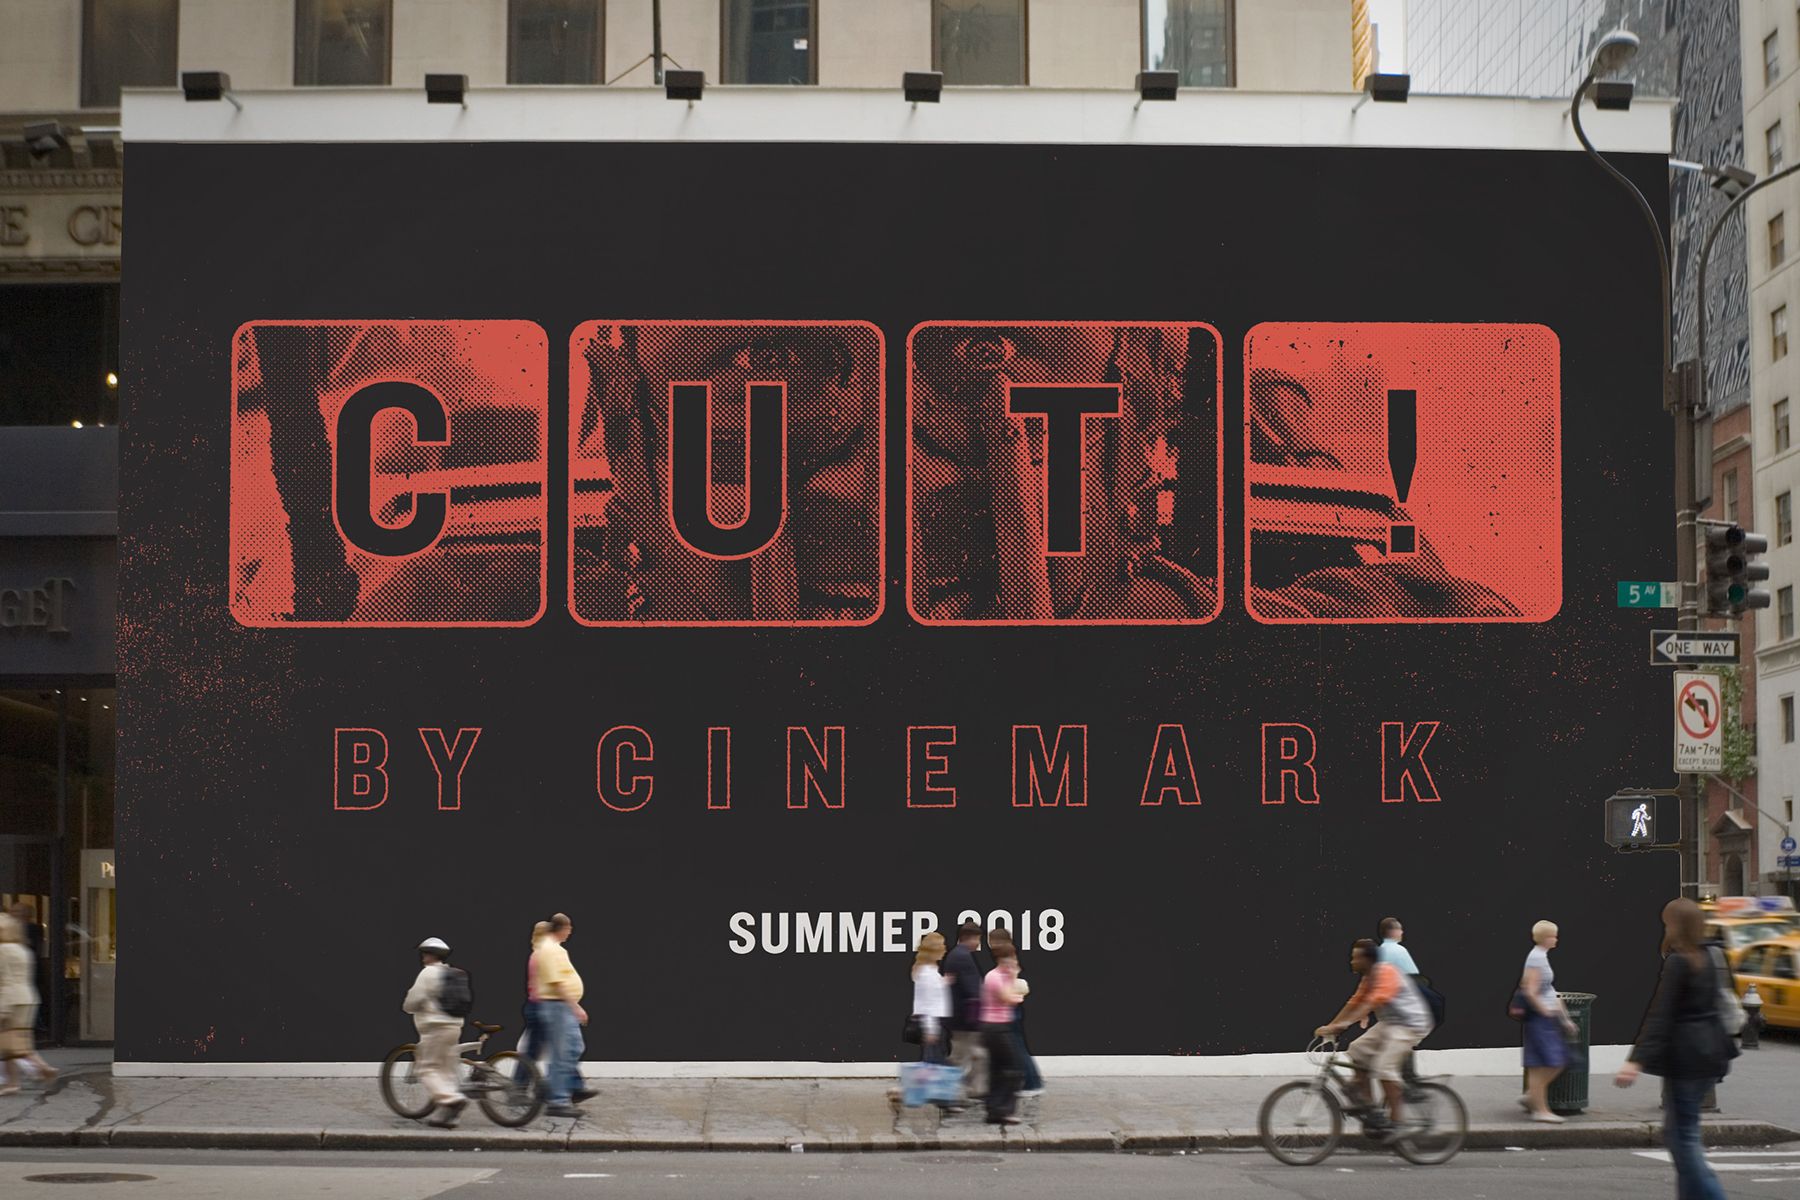 CUT! by Cinemark